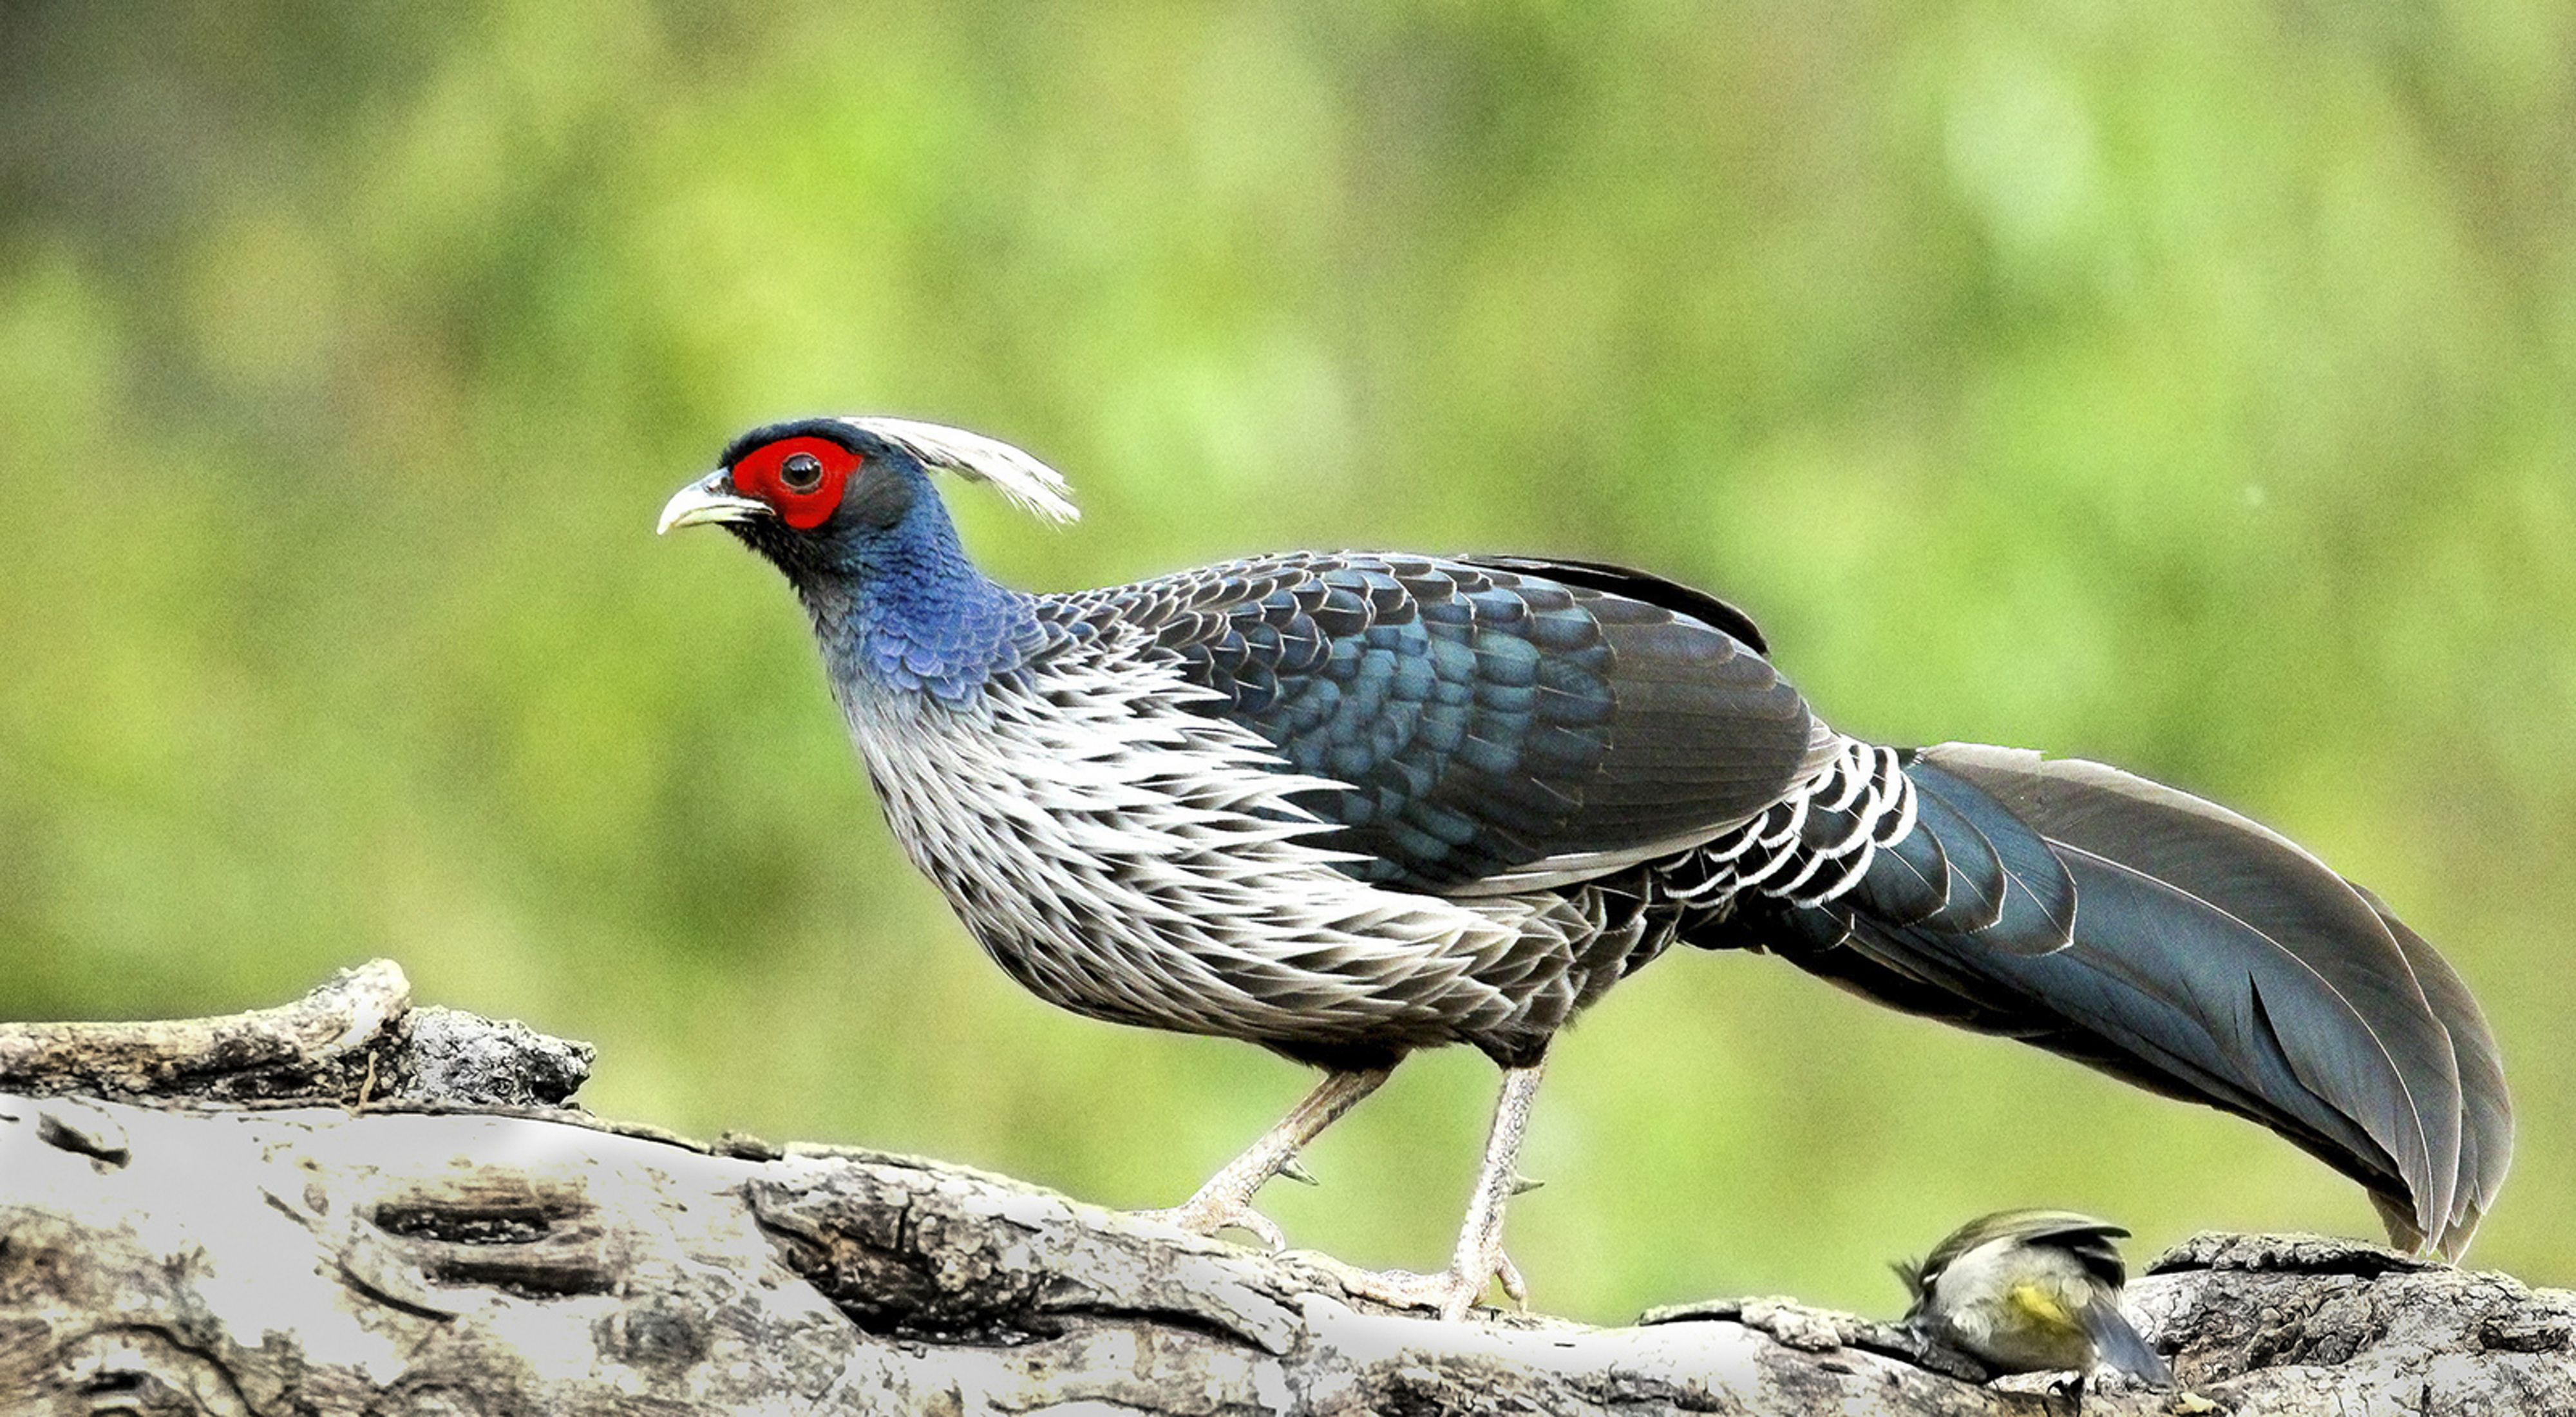 A male at Sattal, Uttarakhand in the bird's natural habitat